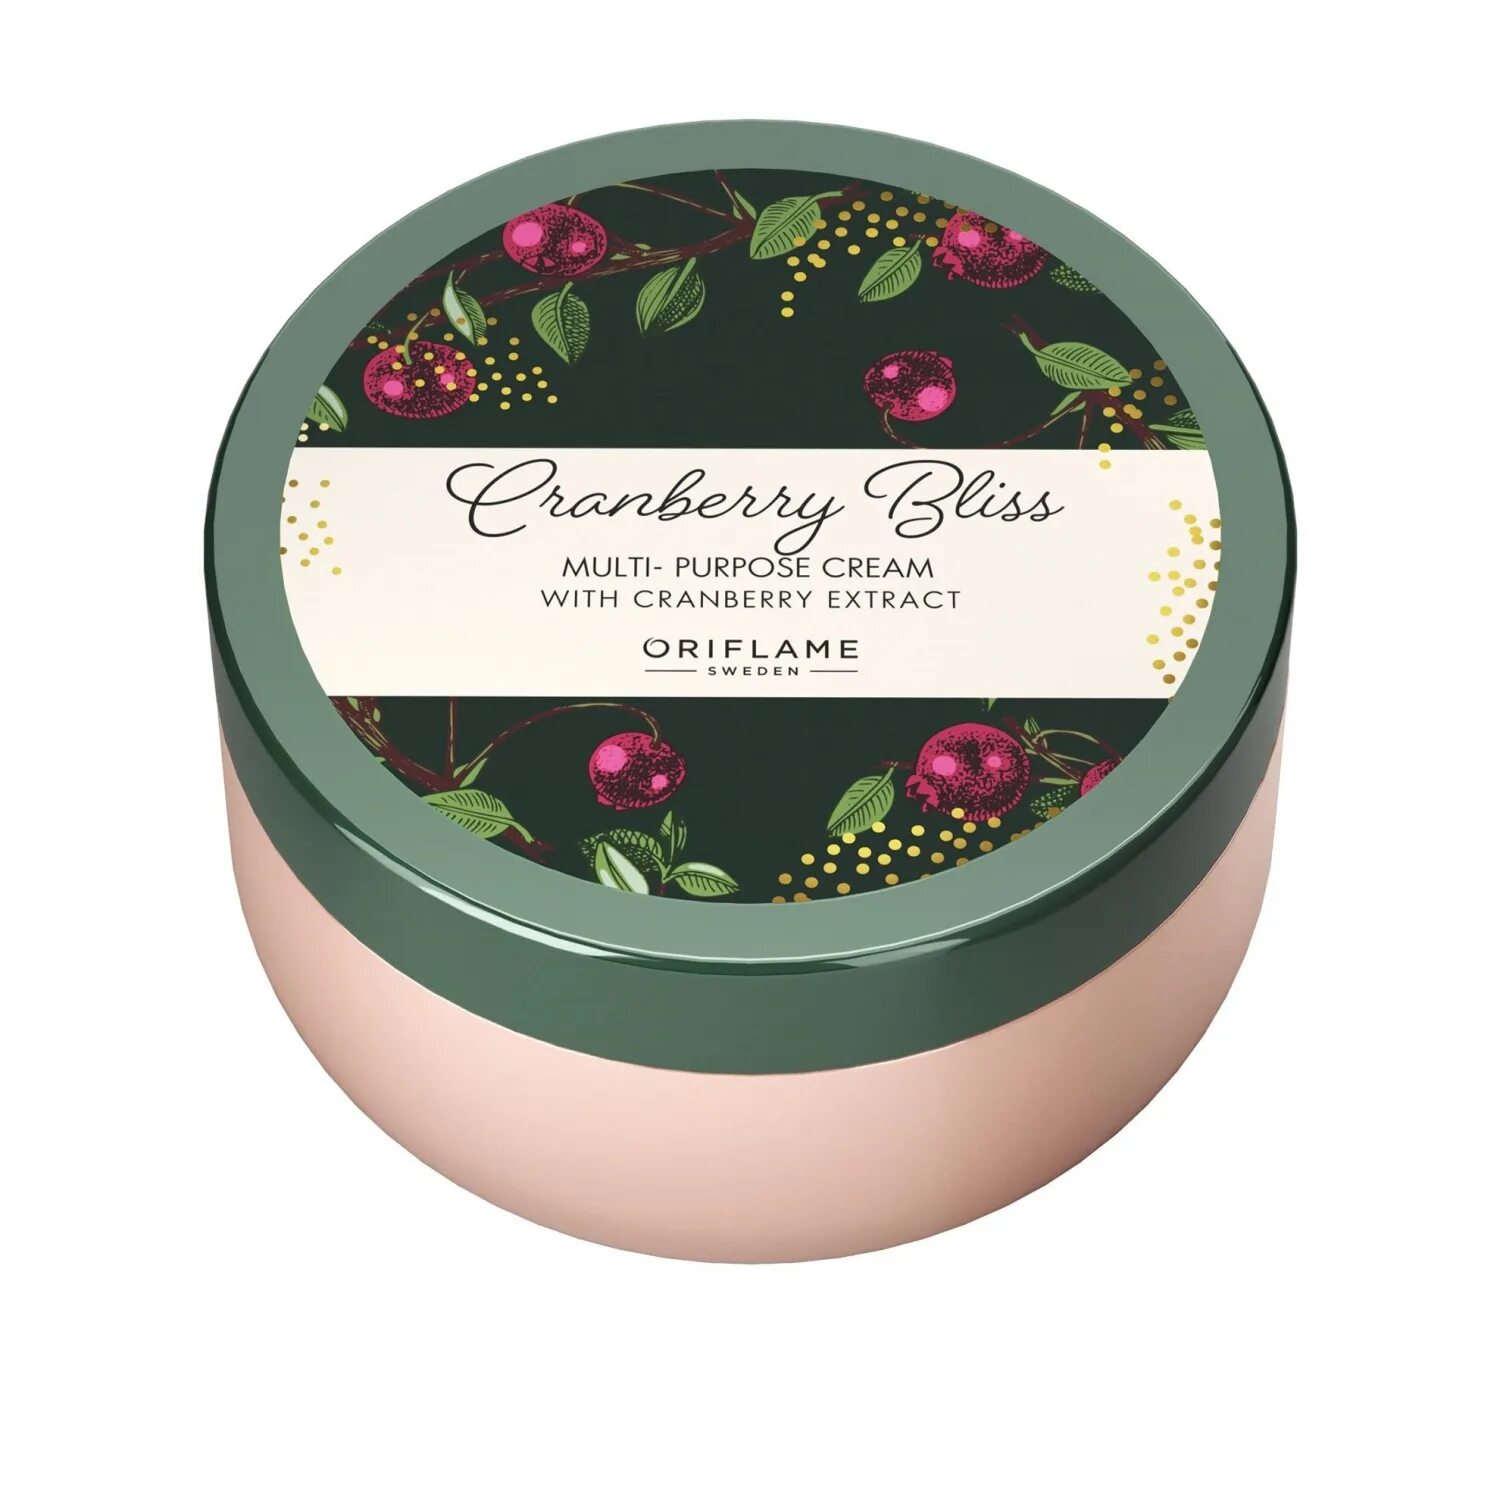 Cranberry Bliss Орифлейм крем. Cranberry Bliss Multi-purpose Cream Oriflame. Орифлейм крем для лица и тела клюква. Универсальный крем для лица и тела Cranberry Bliss.